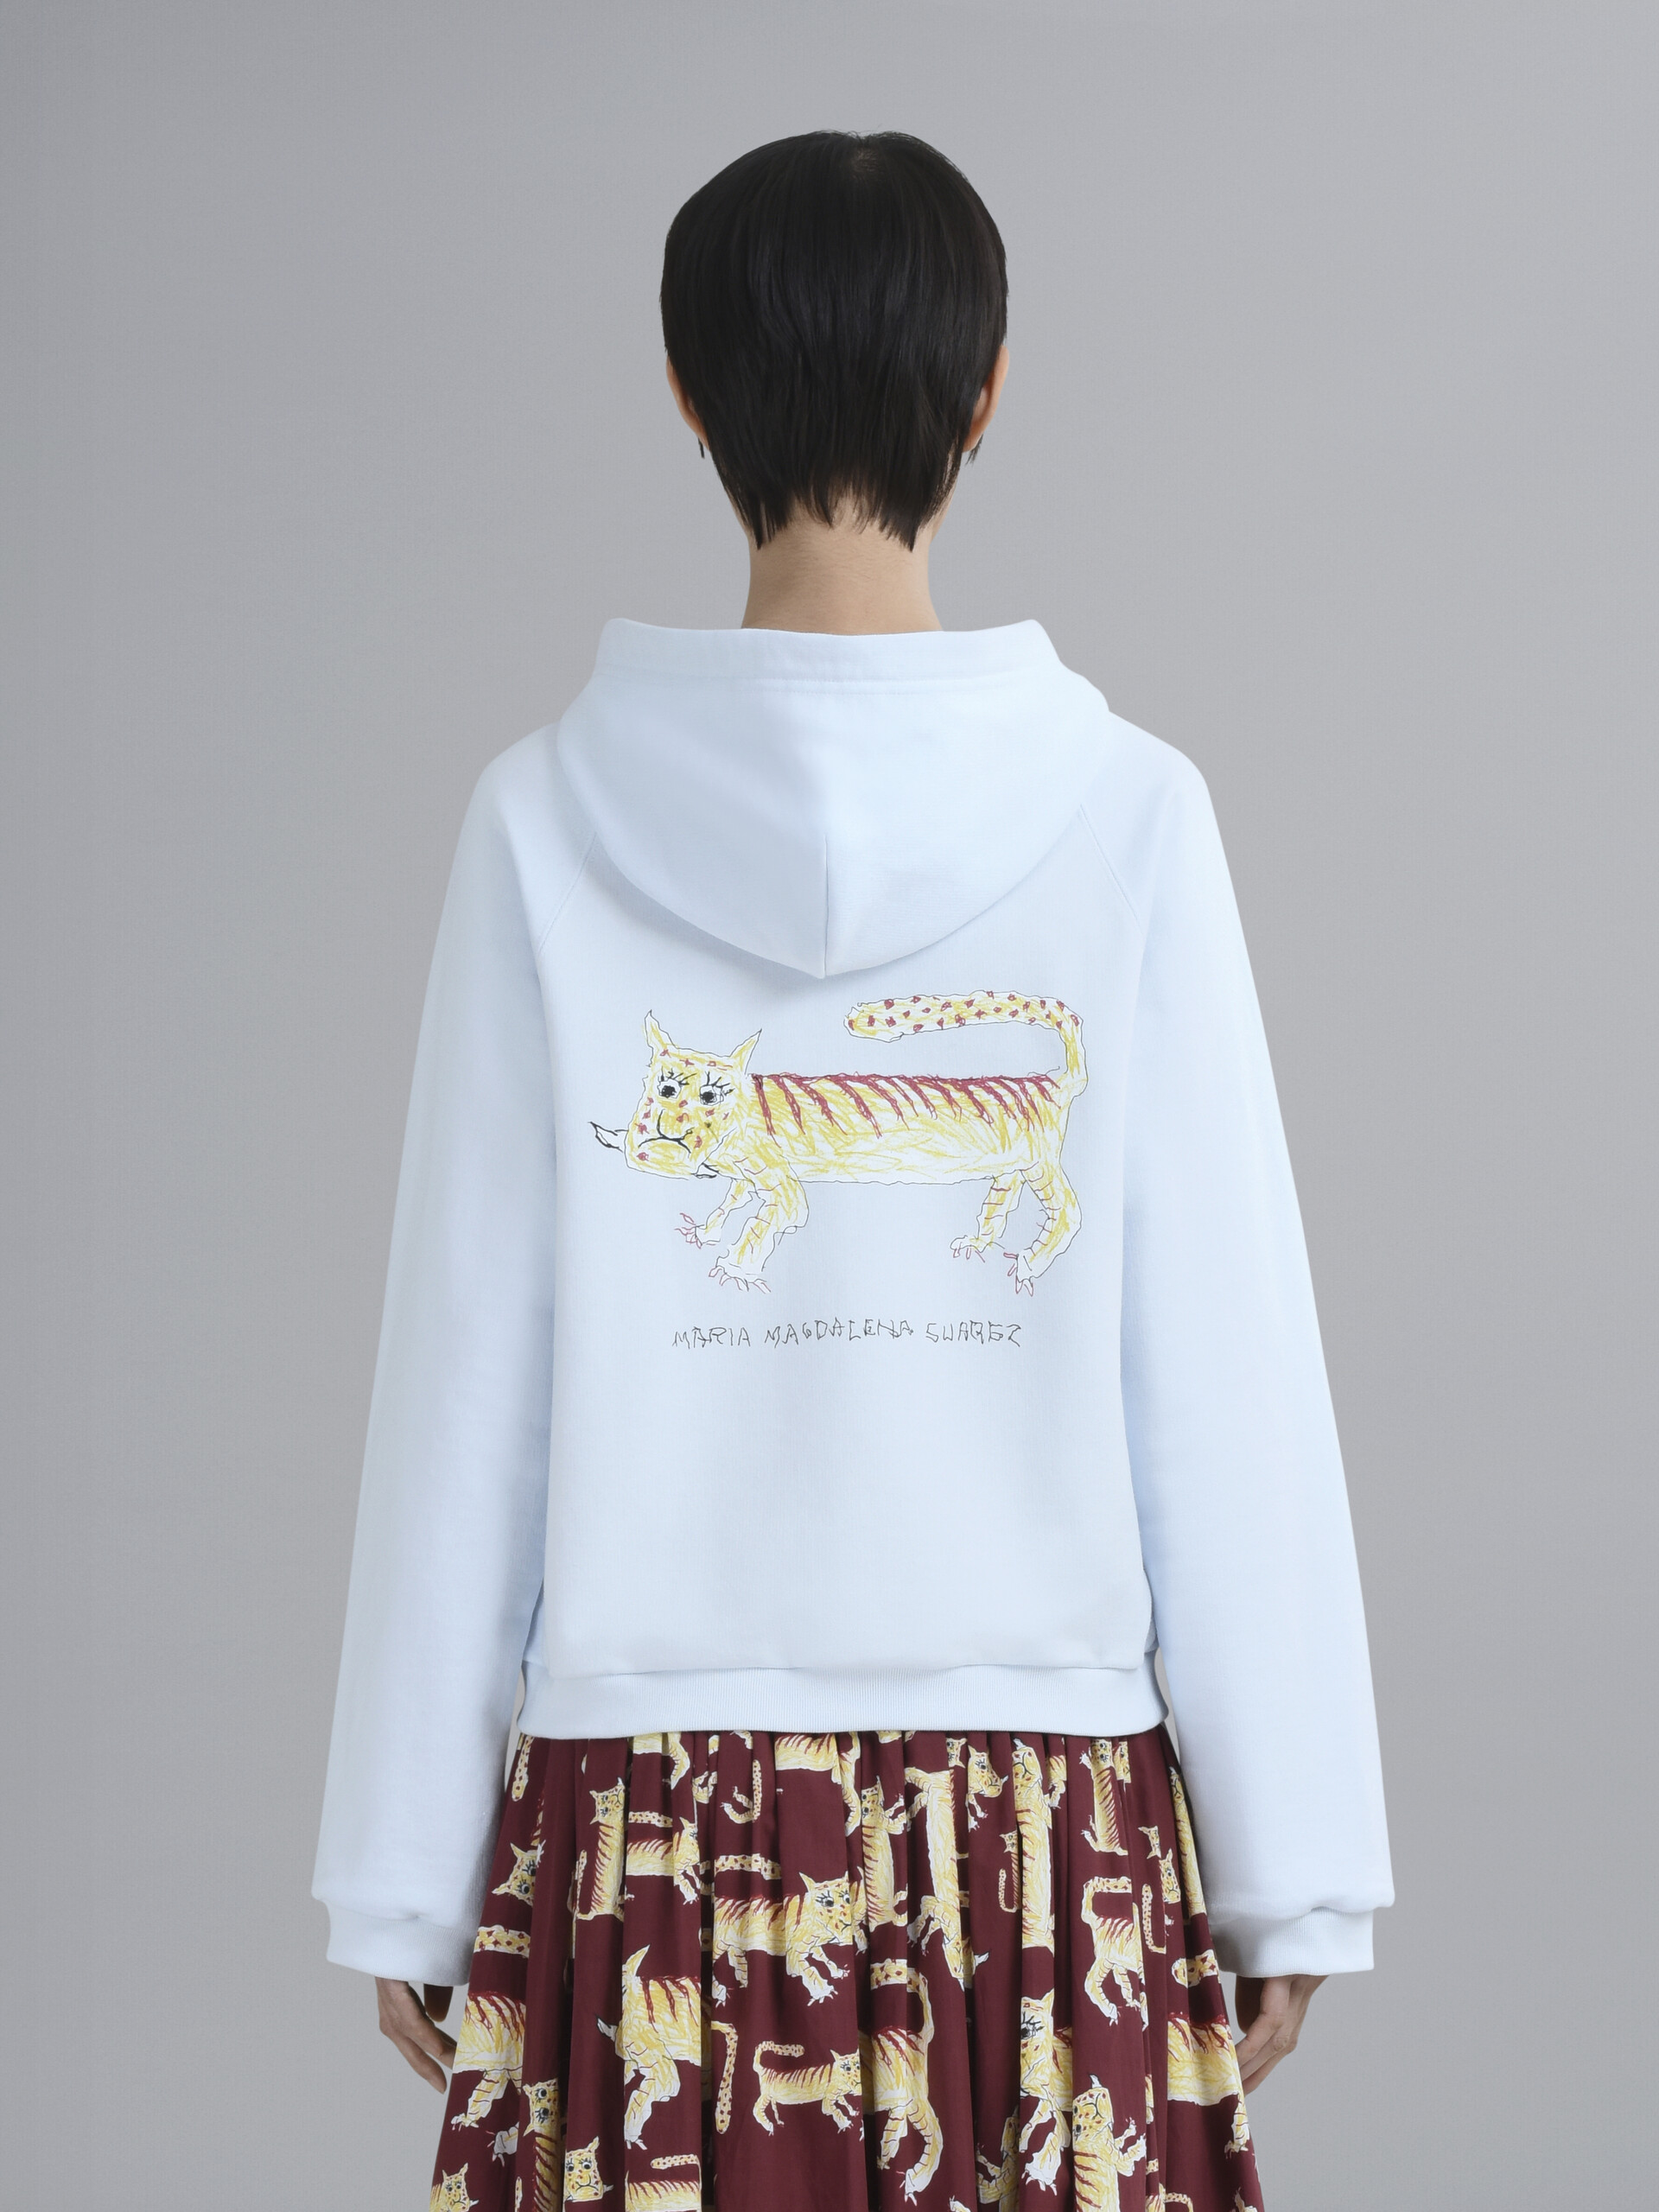 Baumwoll-Sweatshirt mit Naif Tiger Print - Strickwaren - Image 3